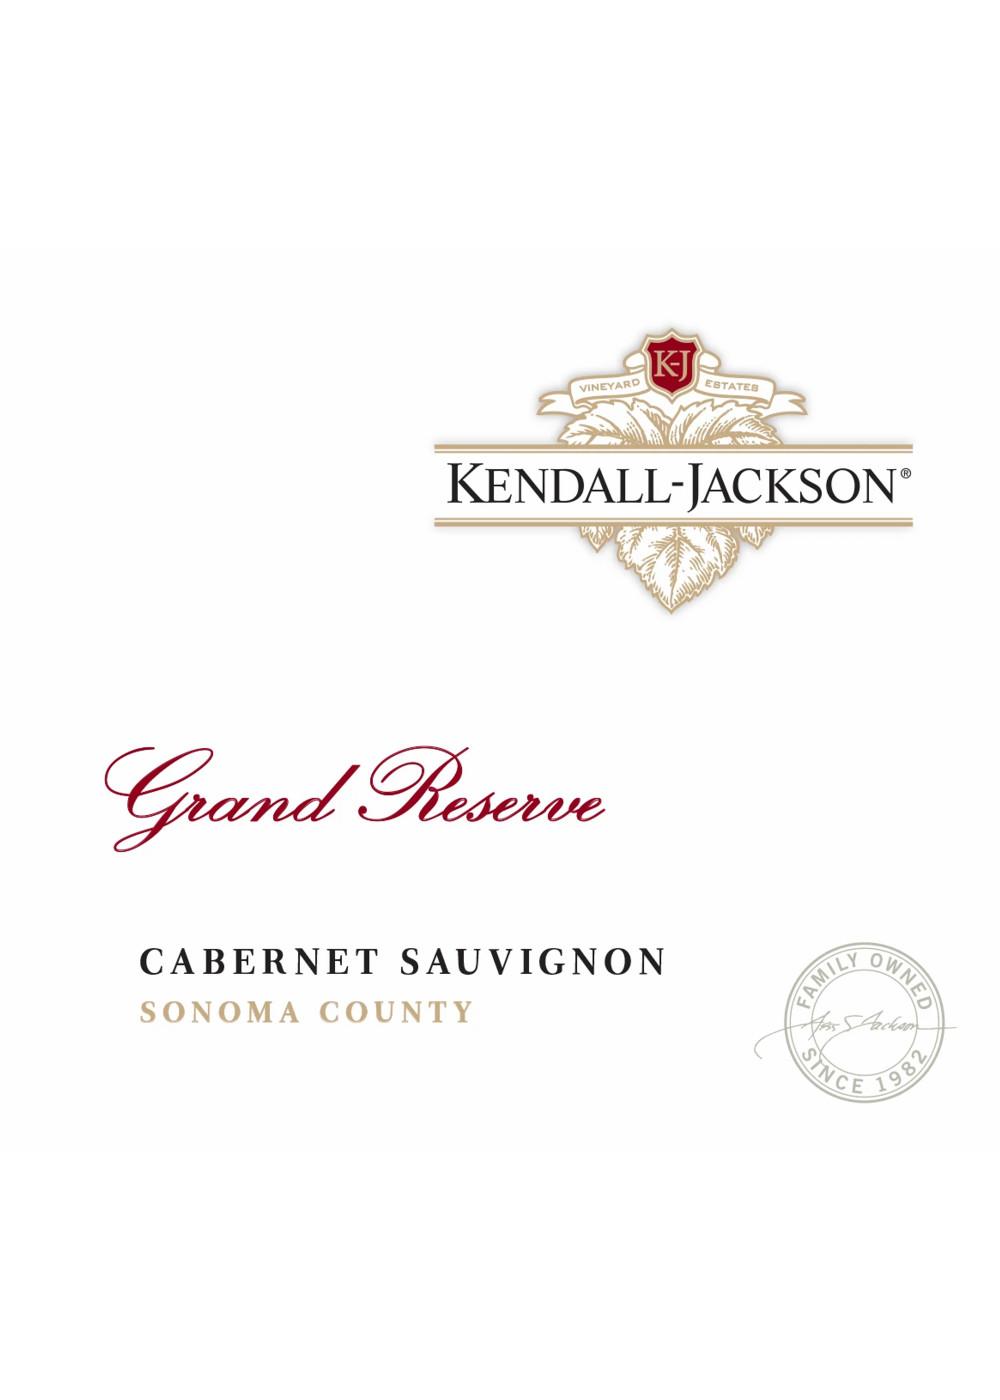 Kendall-Jackson Grand Reserve Cabernet Sauvignon Red Wine; image 2 of 2